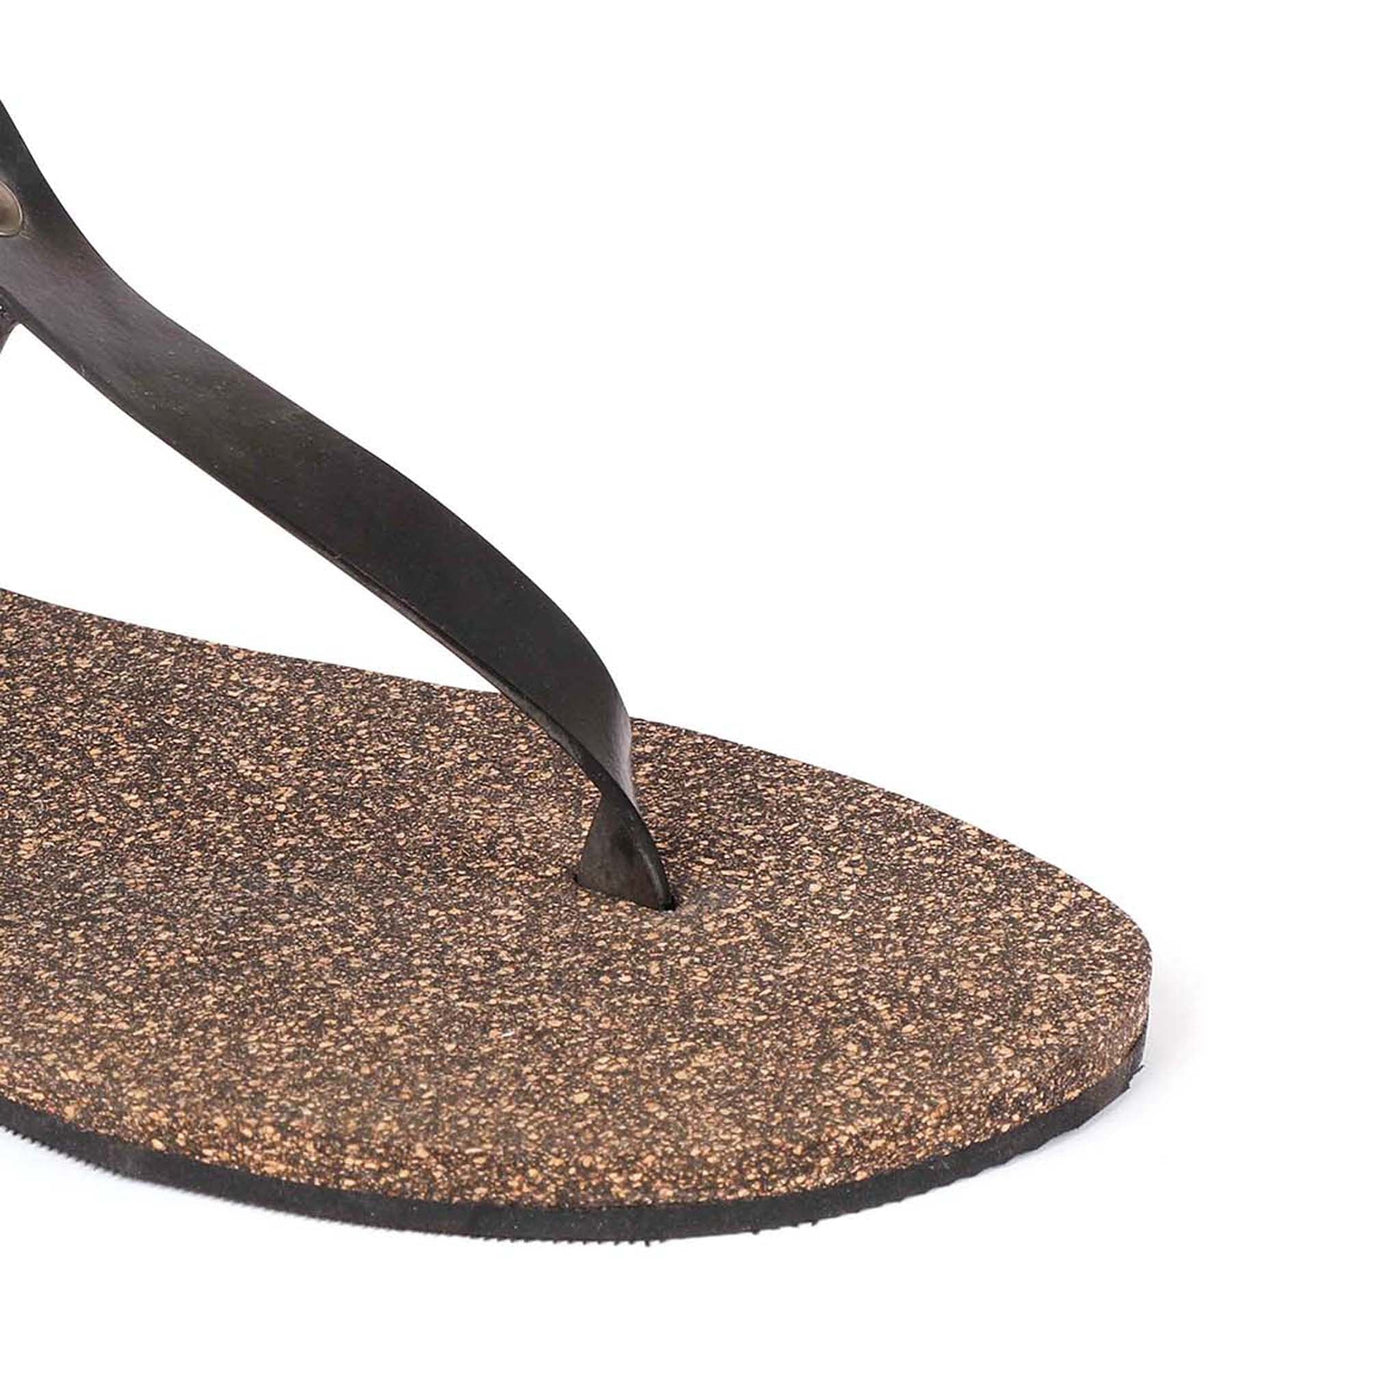 Ara T-Strap Black Cork Sandals for Women